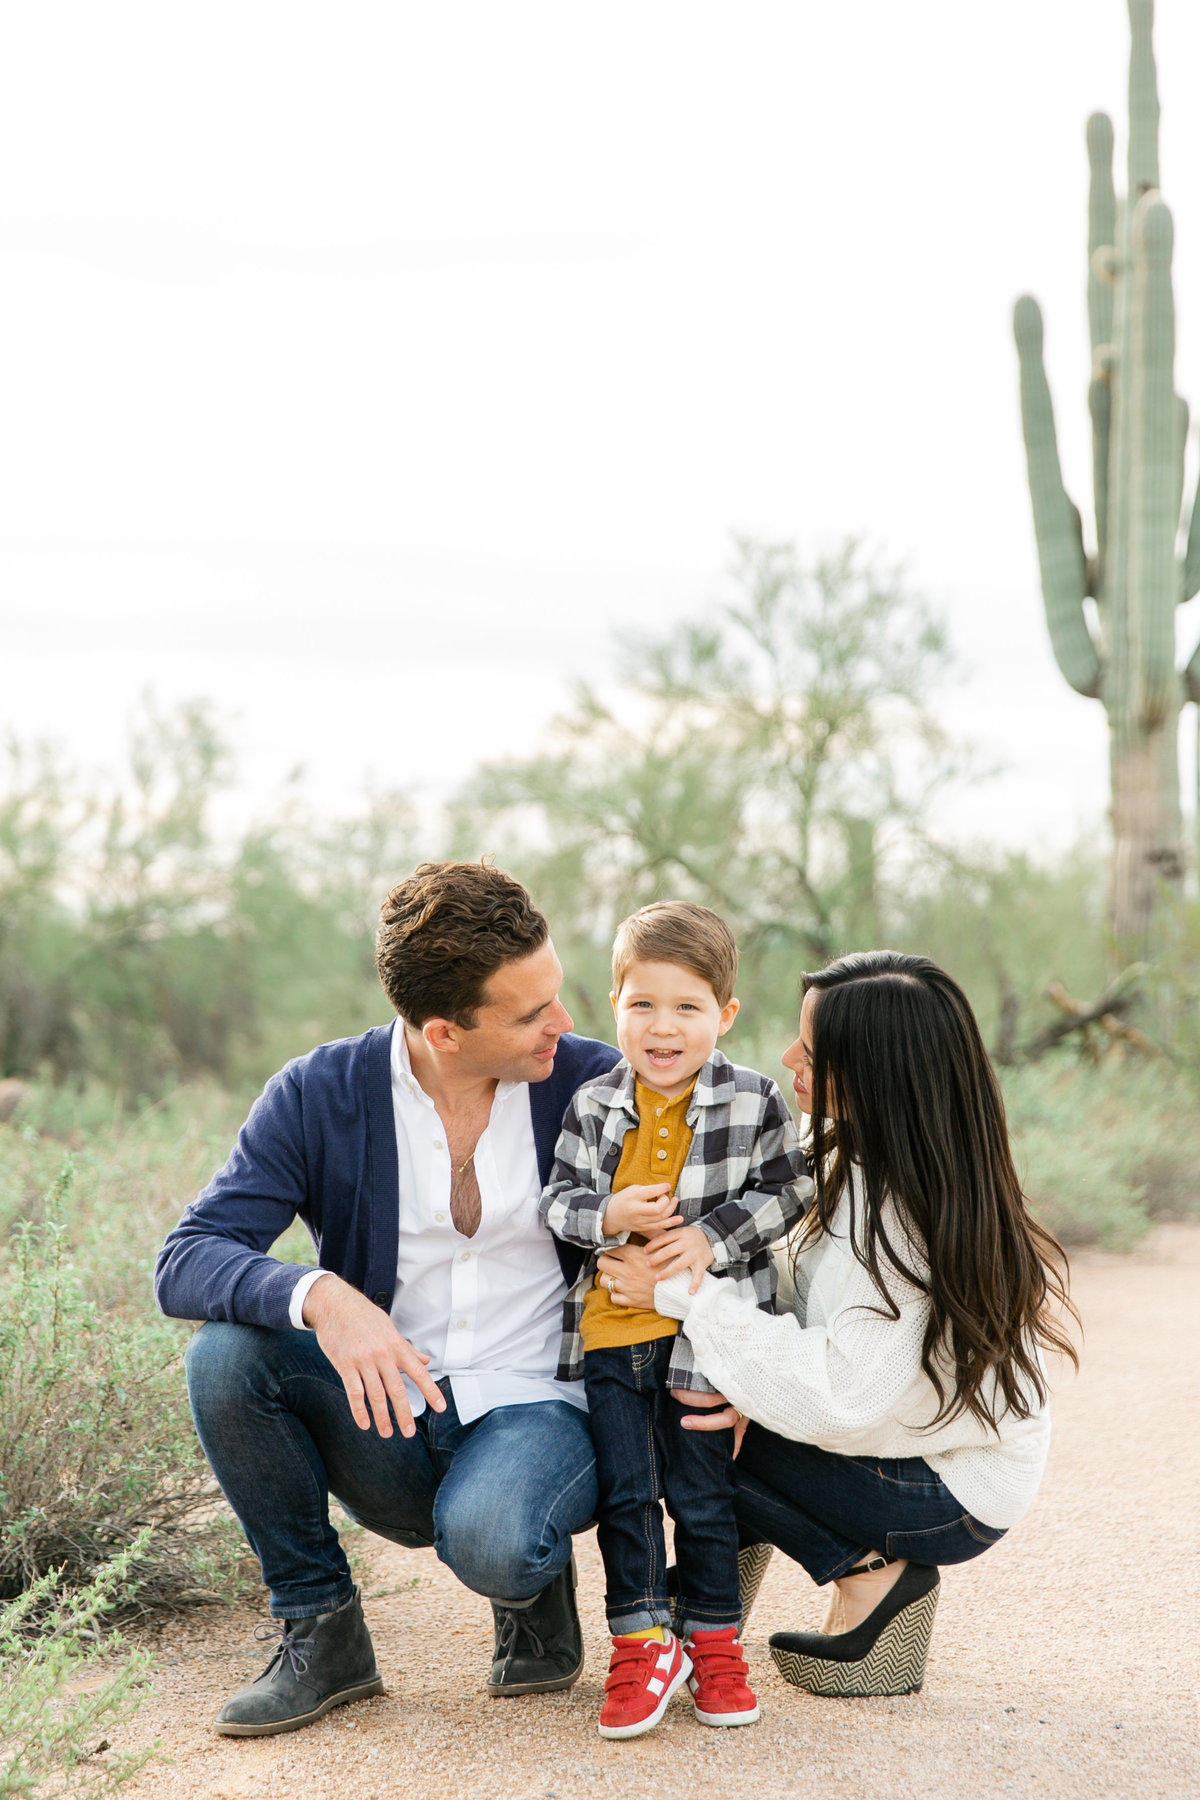 Karlie Colleen Photography - Scottsdale Arizona - Family portraits - Taylor & Family-76